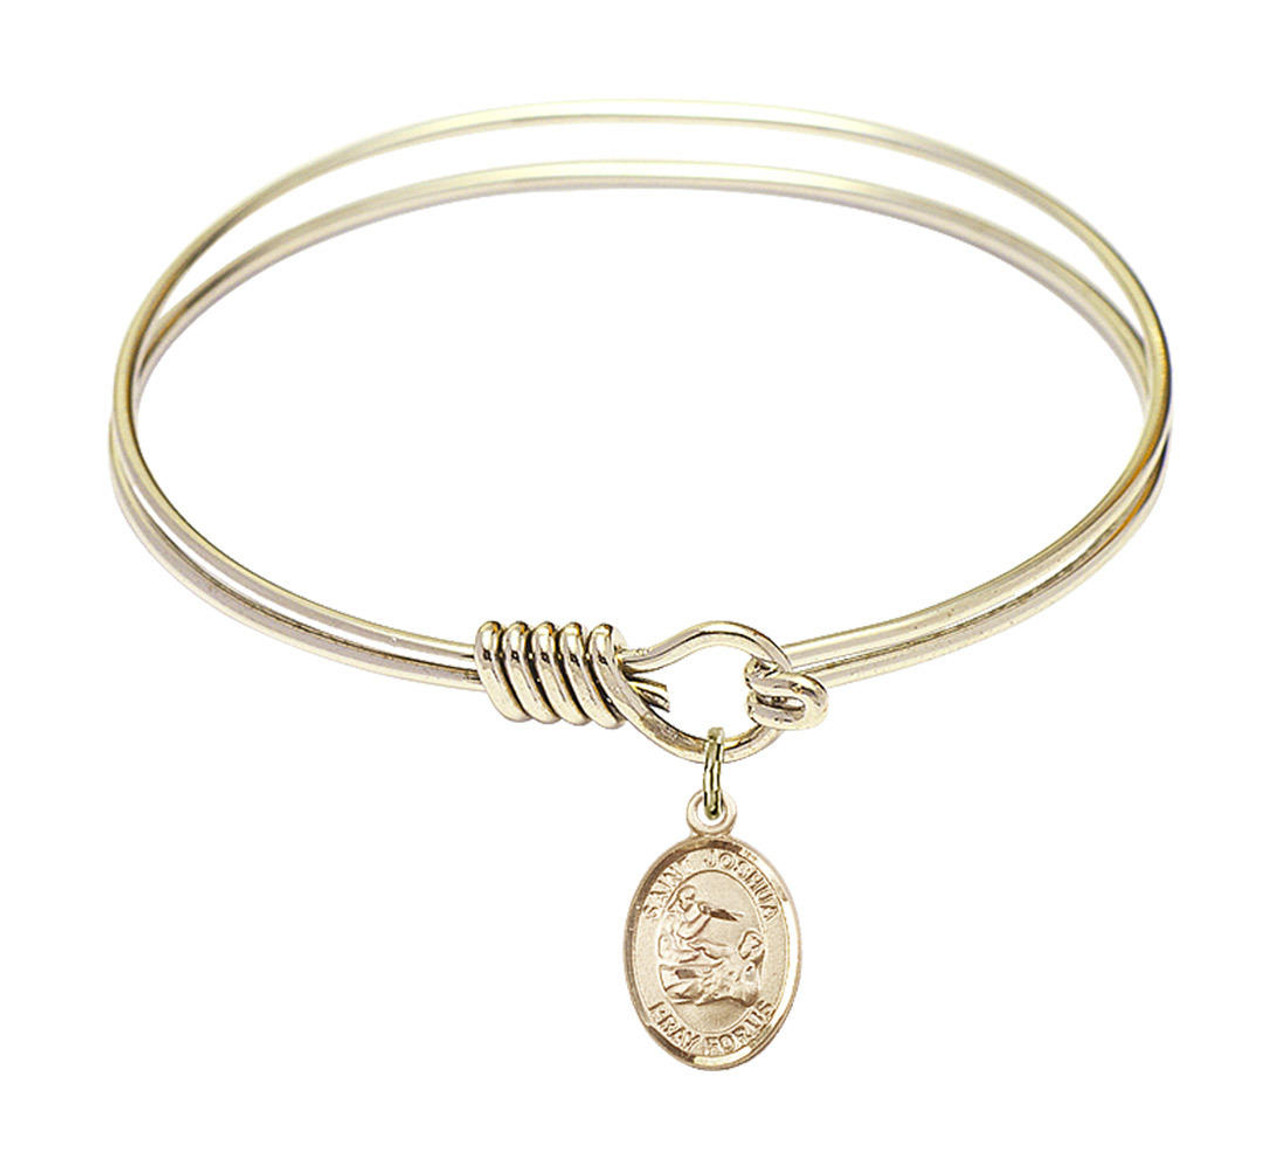 St Joshua Round Eye Hook Bangle Bracelet - Gold-Filled Charm - 6.25 Inch  (9059GF)